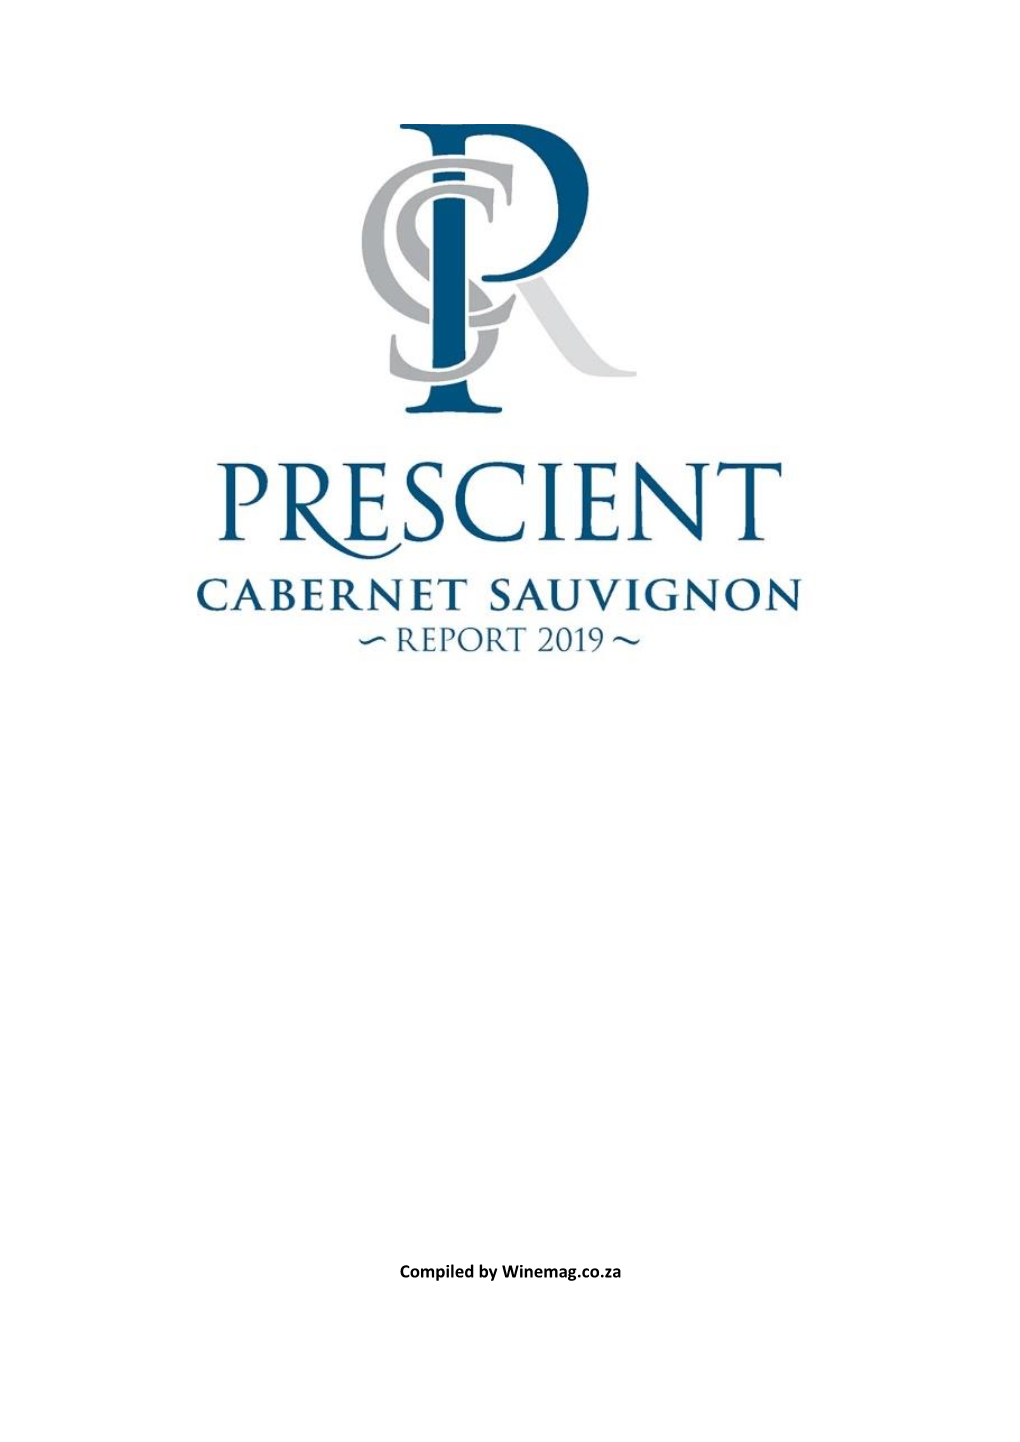 Prescient Cabernet Sauvignon Report 2019